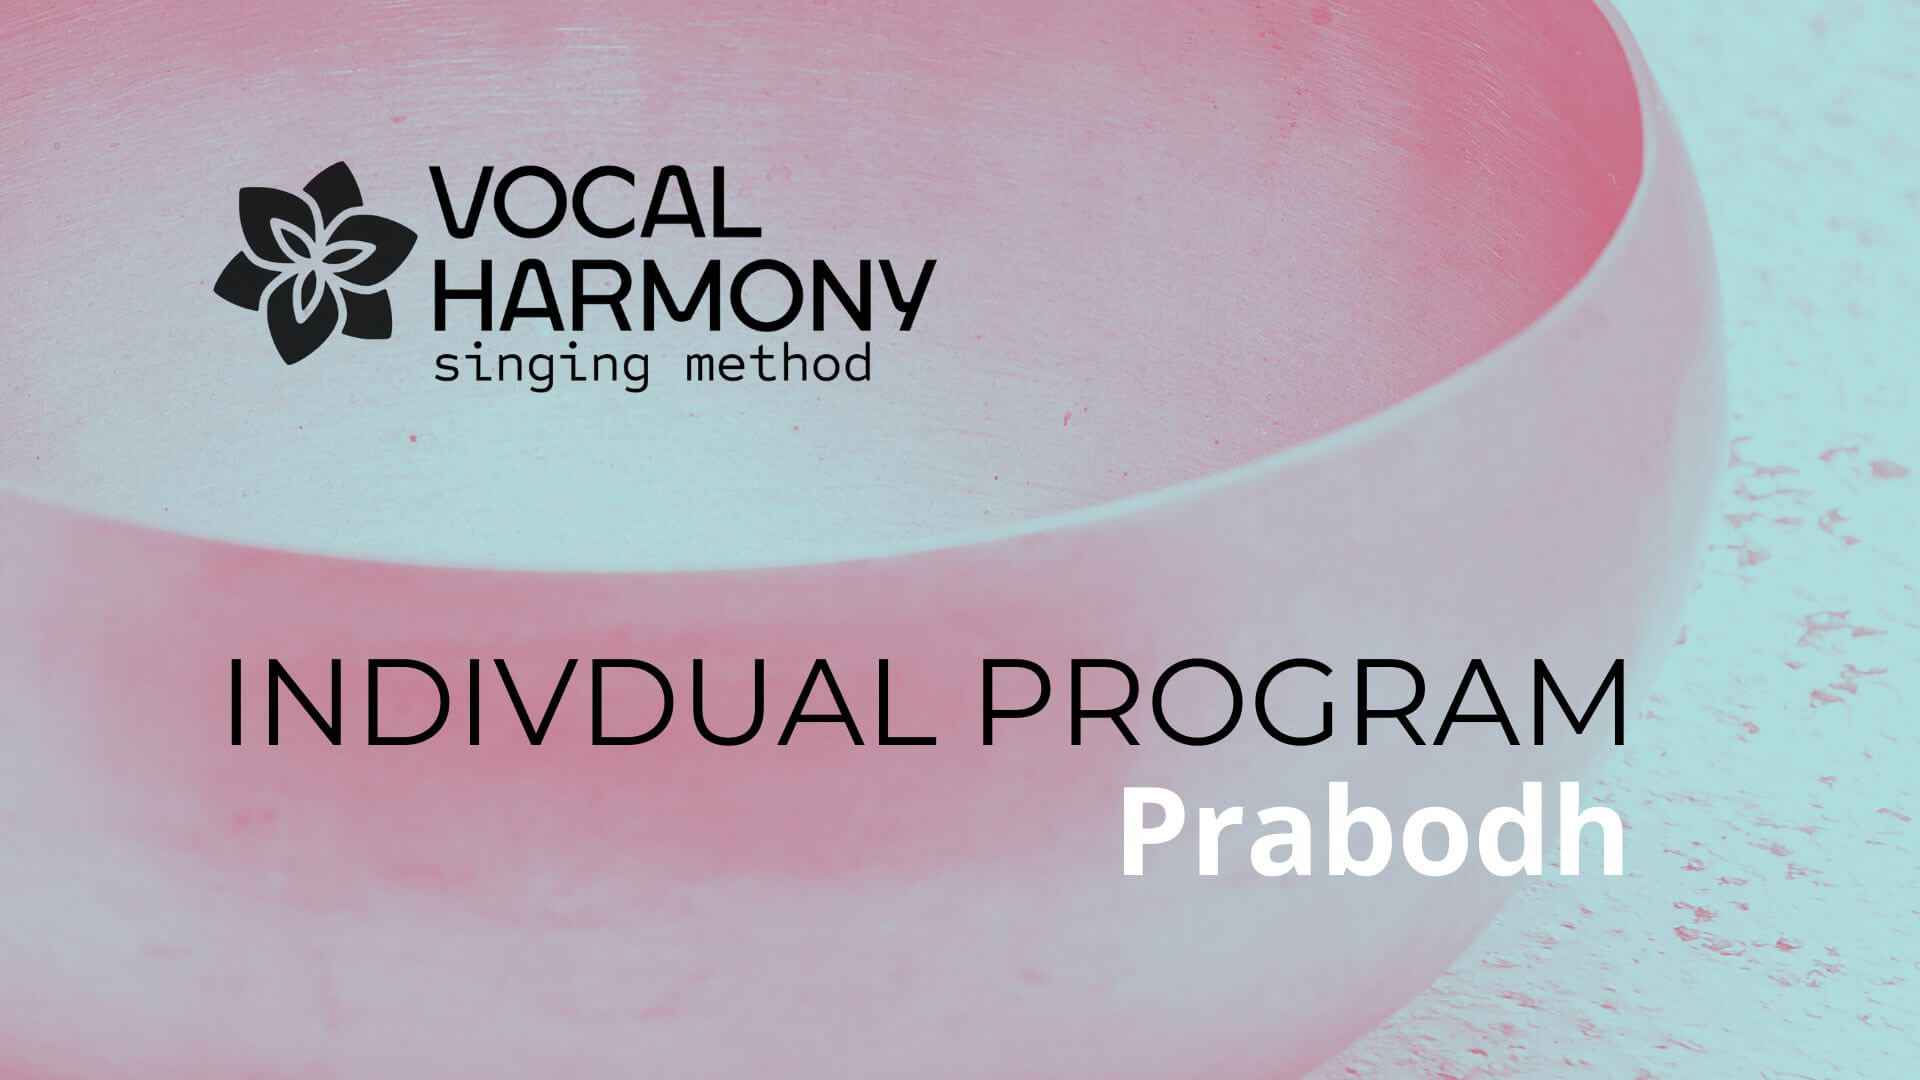 Prabodh – individual program